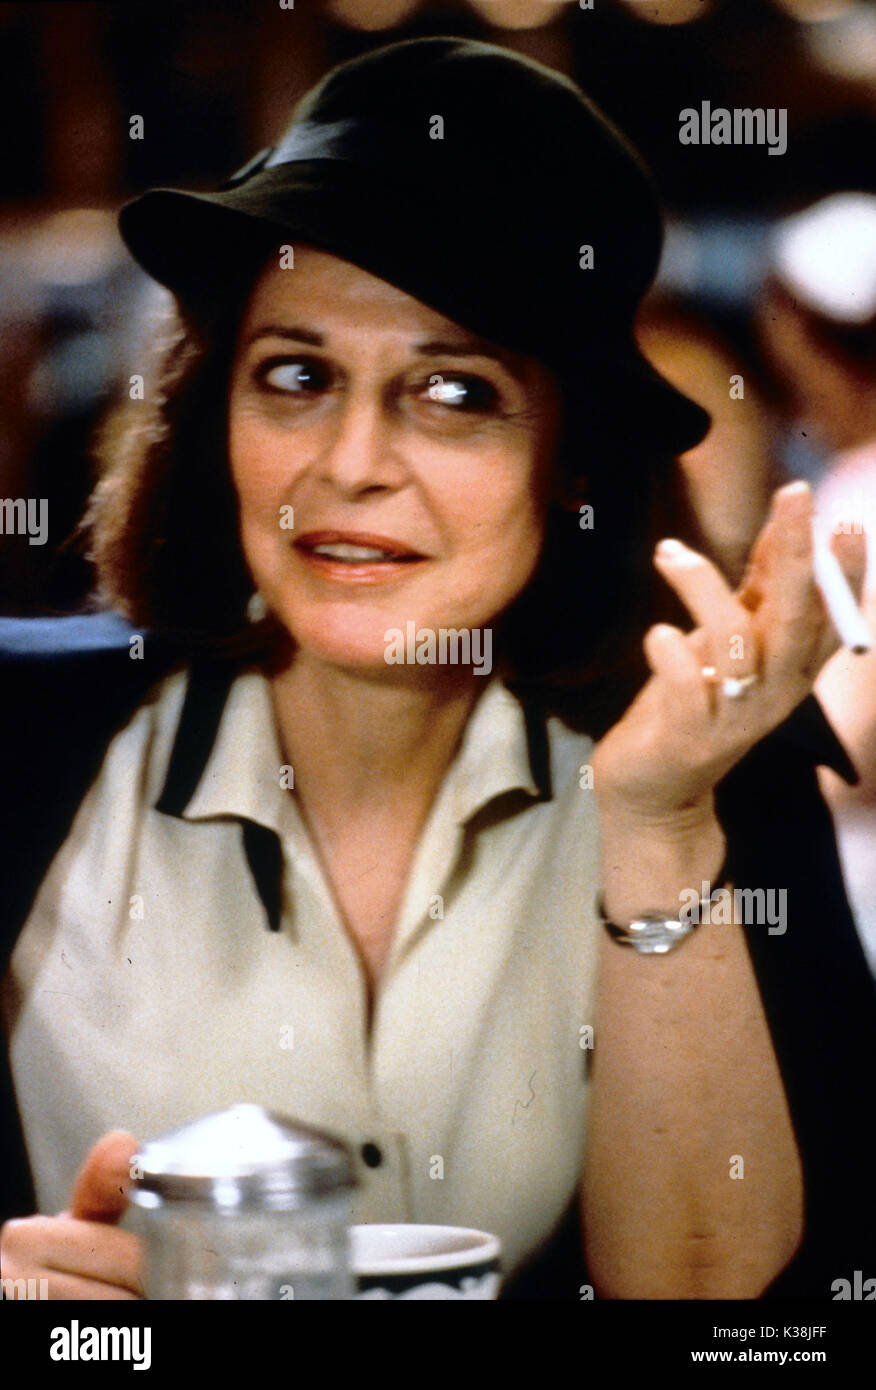 84 CHARING CROSS ROAD ANNE BANCROFT as Helene Hanff     Date: 1987 Stock Photo